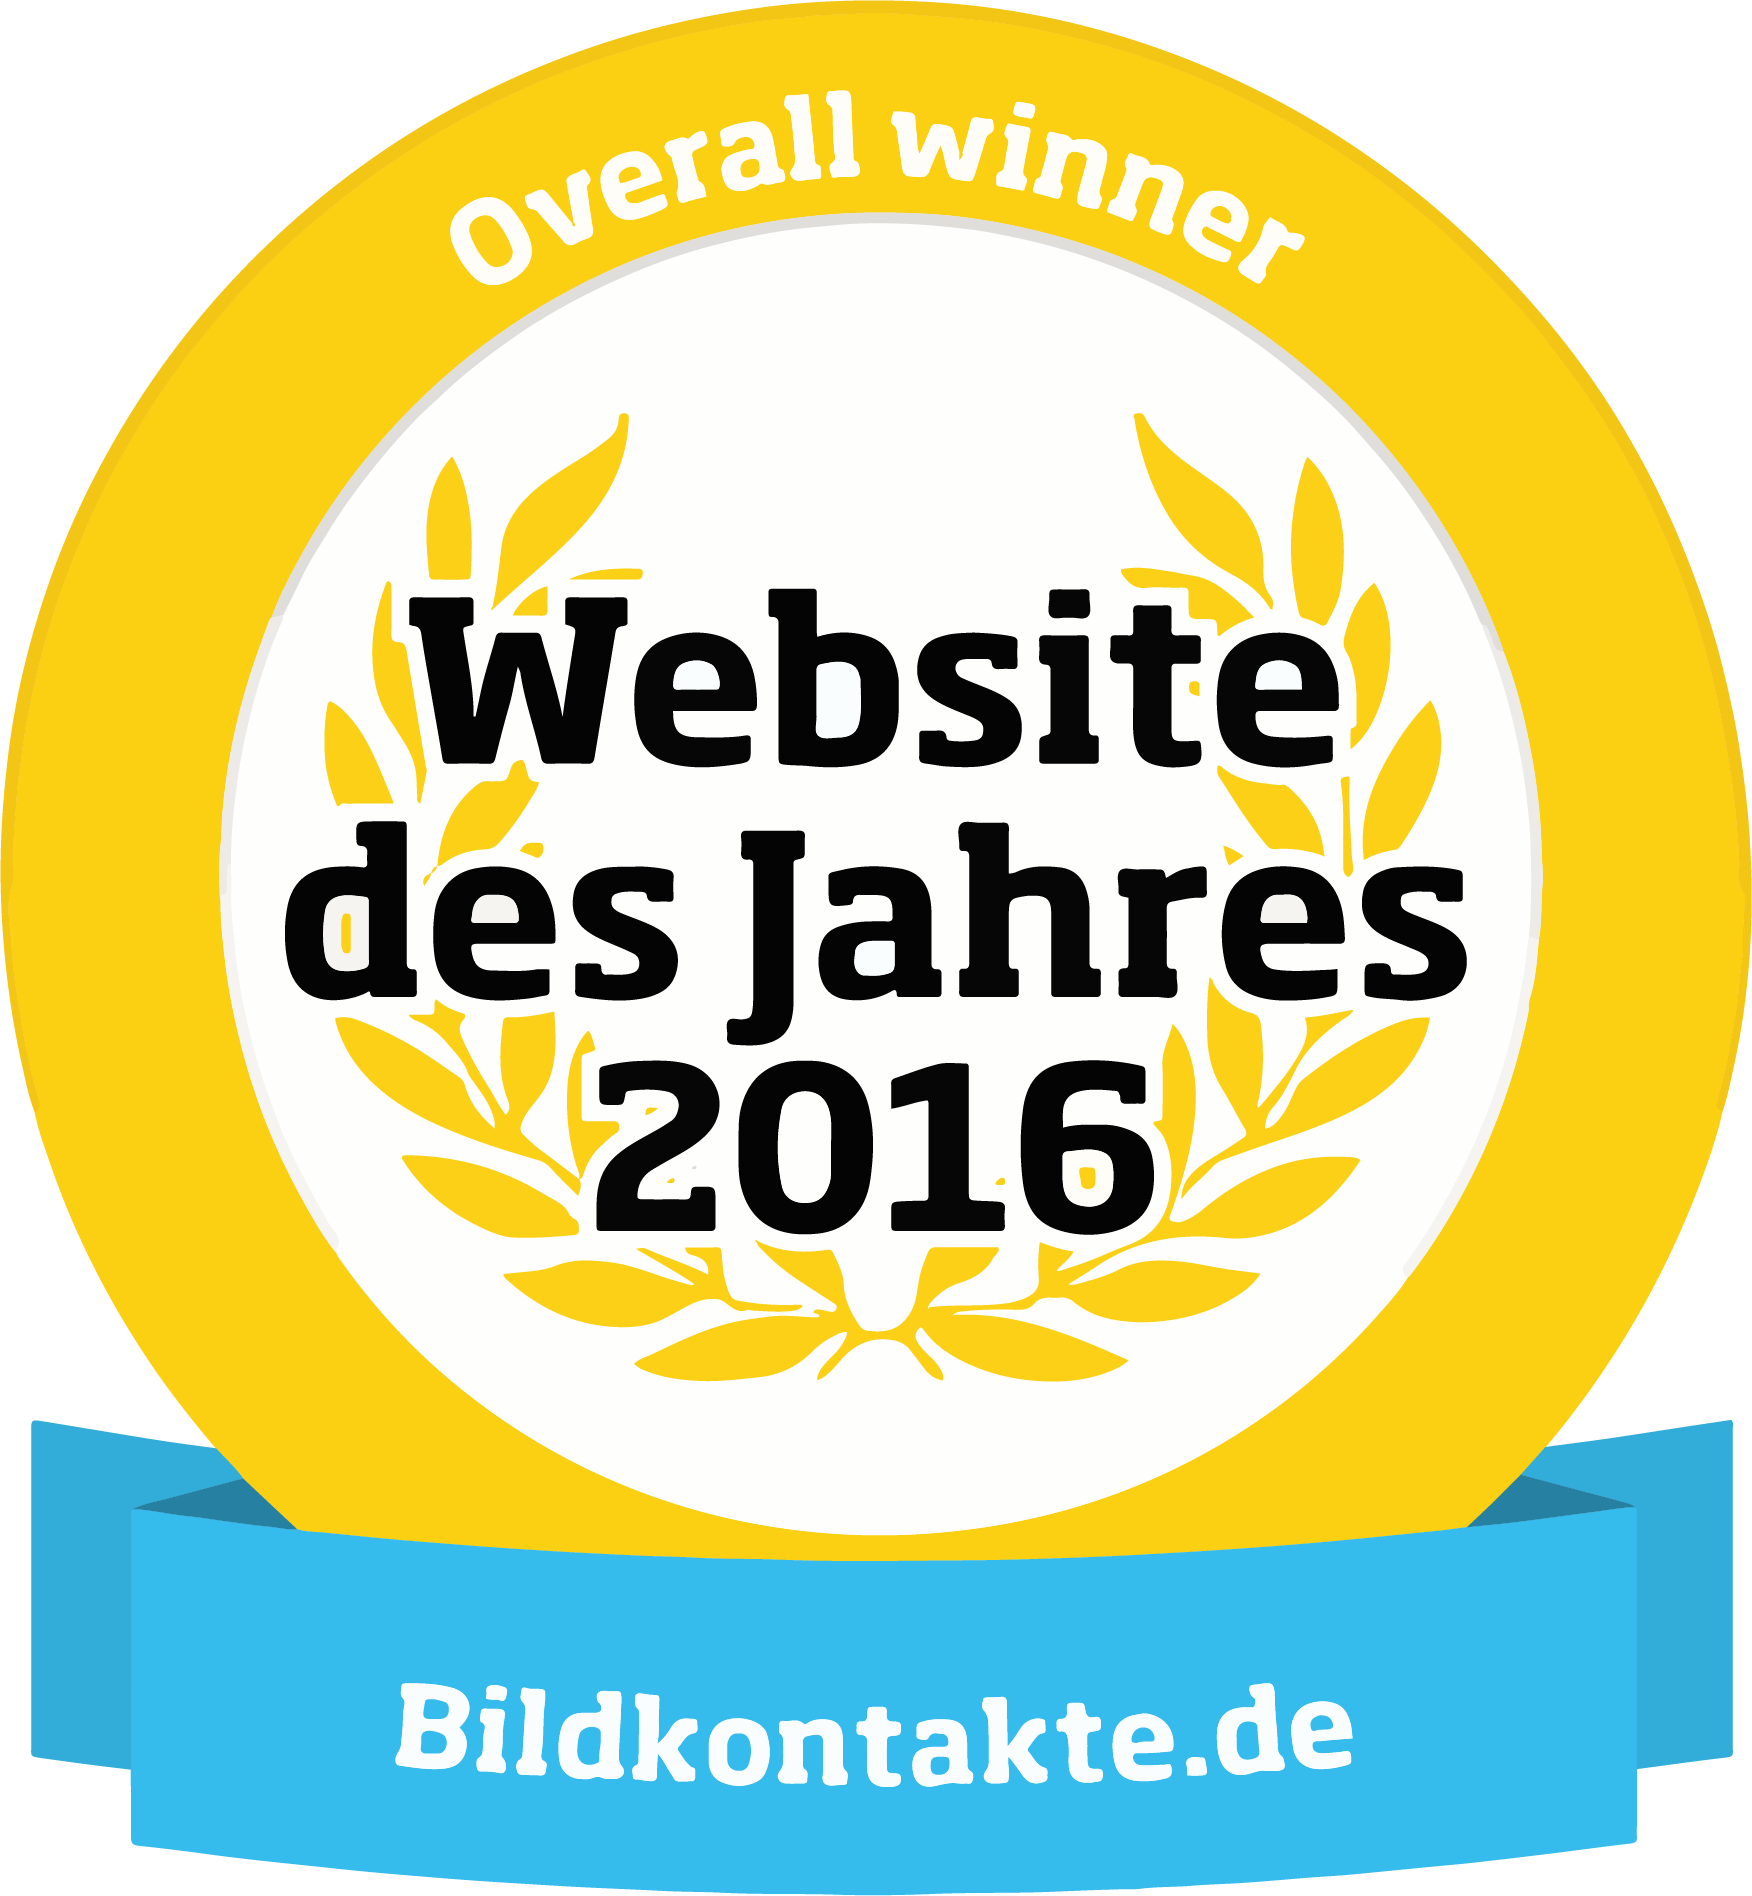 Bildkontakte.de: Overall Winner des Jahres 2016